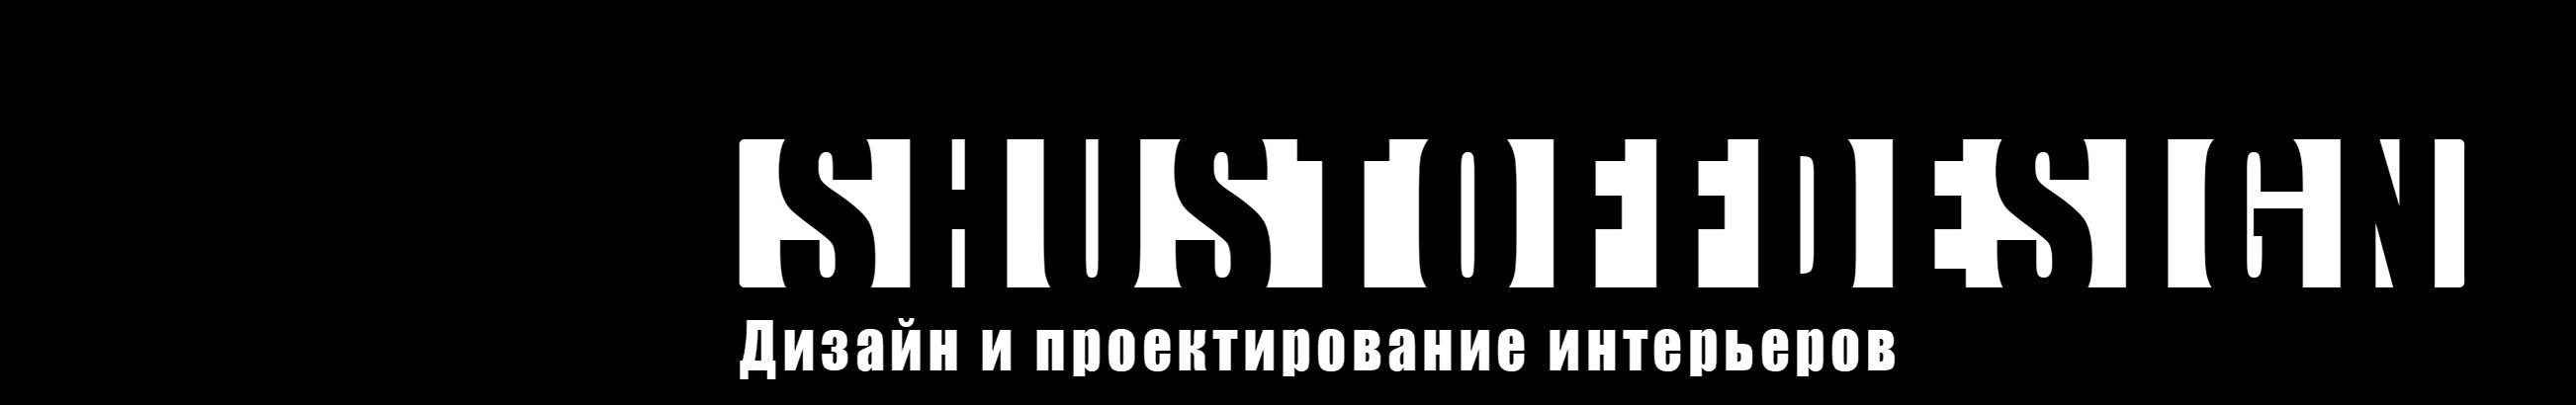 Sergey Shustov's profile banner